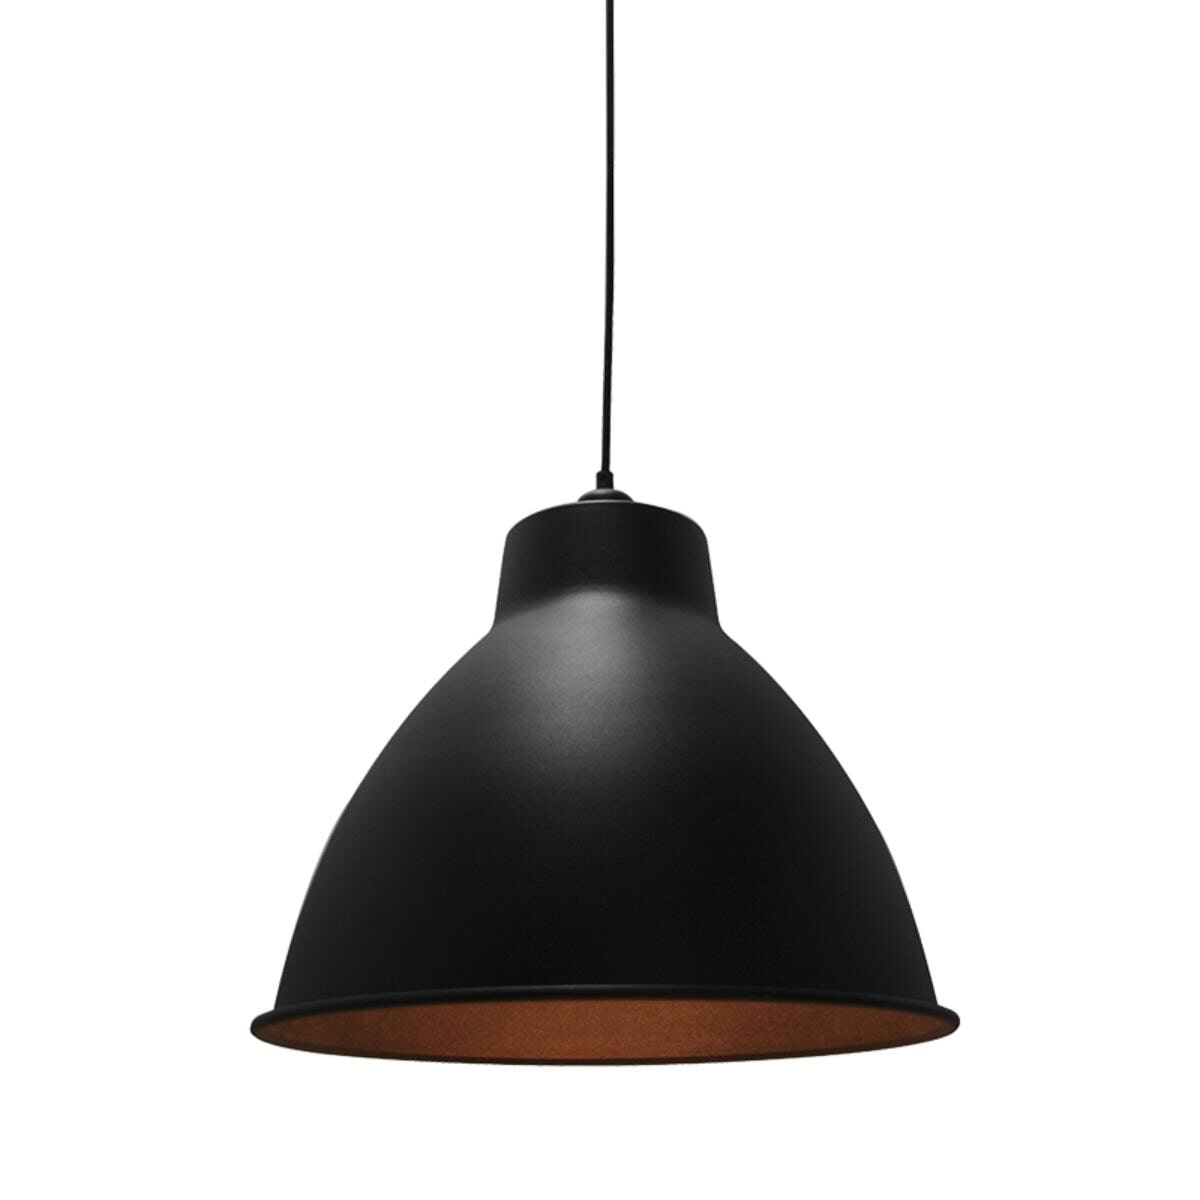 LABEL51 hanglamp 'Dome', kleur Zwart